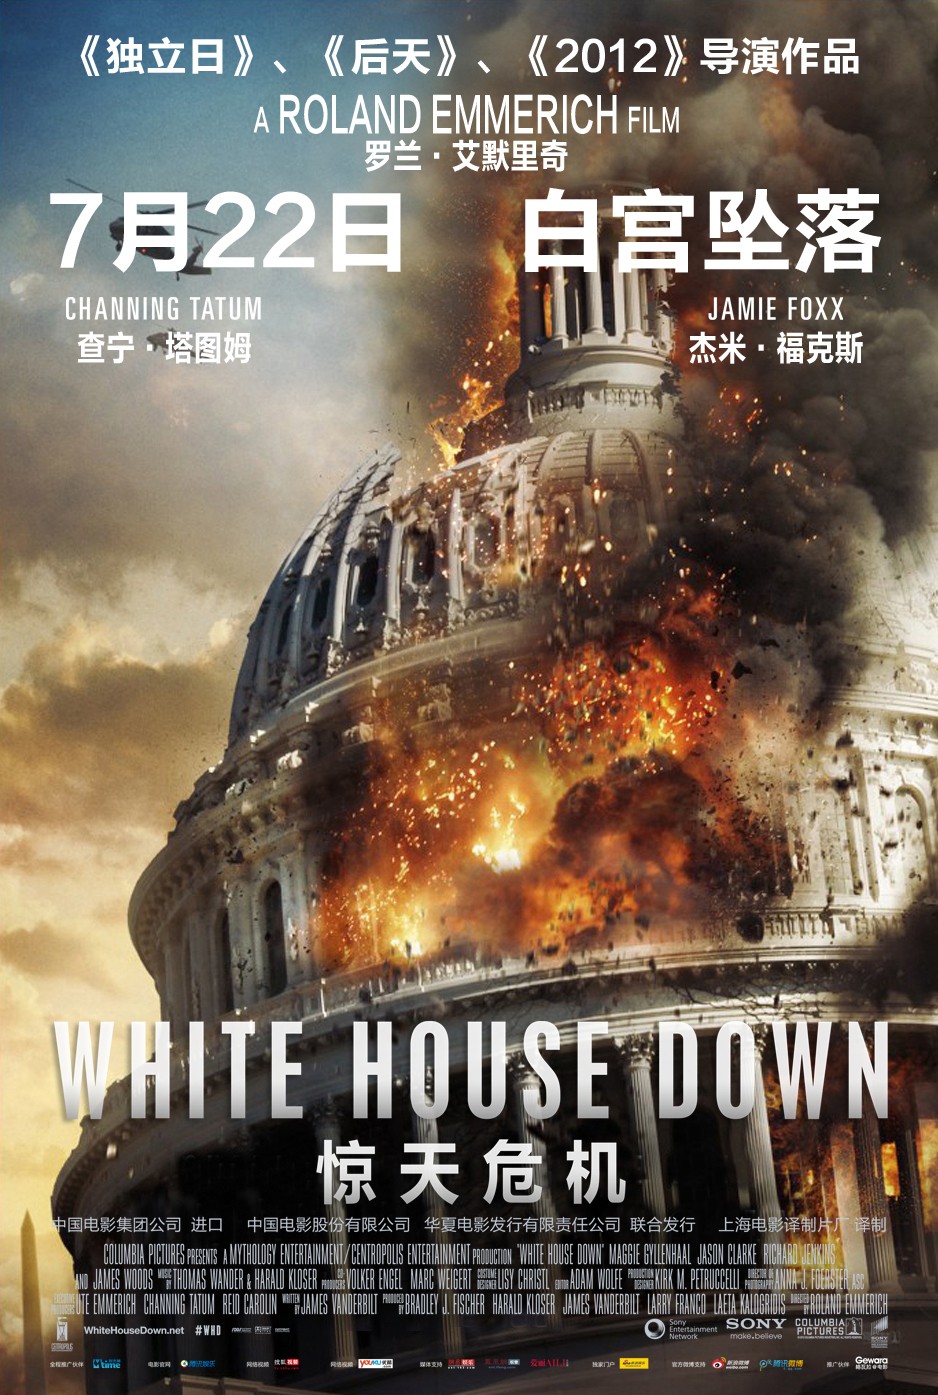 white house movie poster